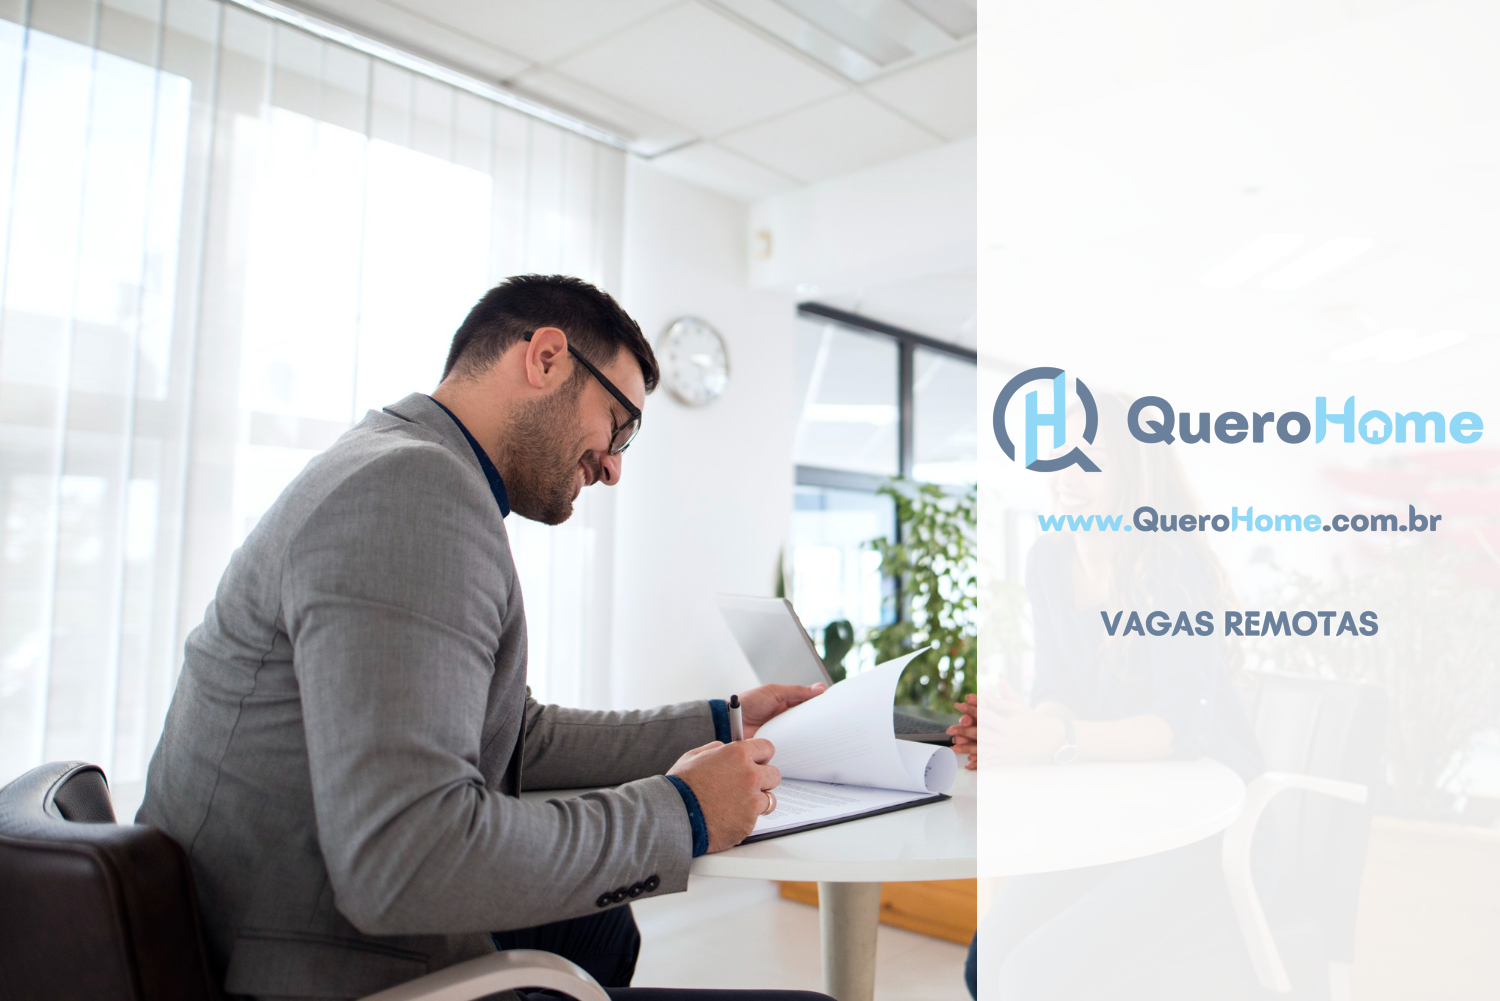 Lead Development Representative, Assistente Supply Chain, Quero Home Vagas Remotas Vagas Home Office